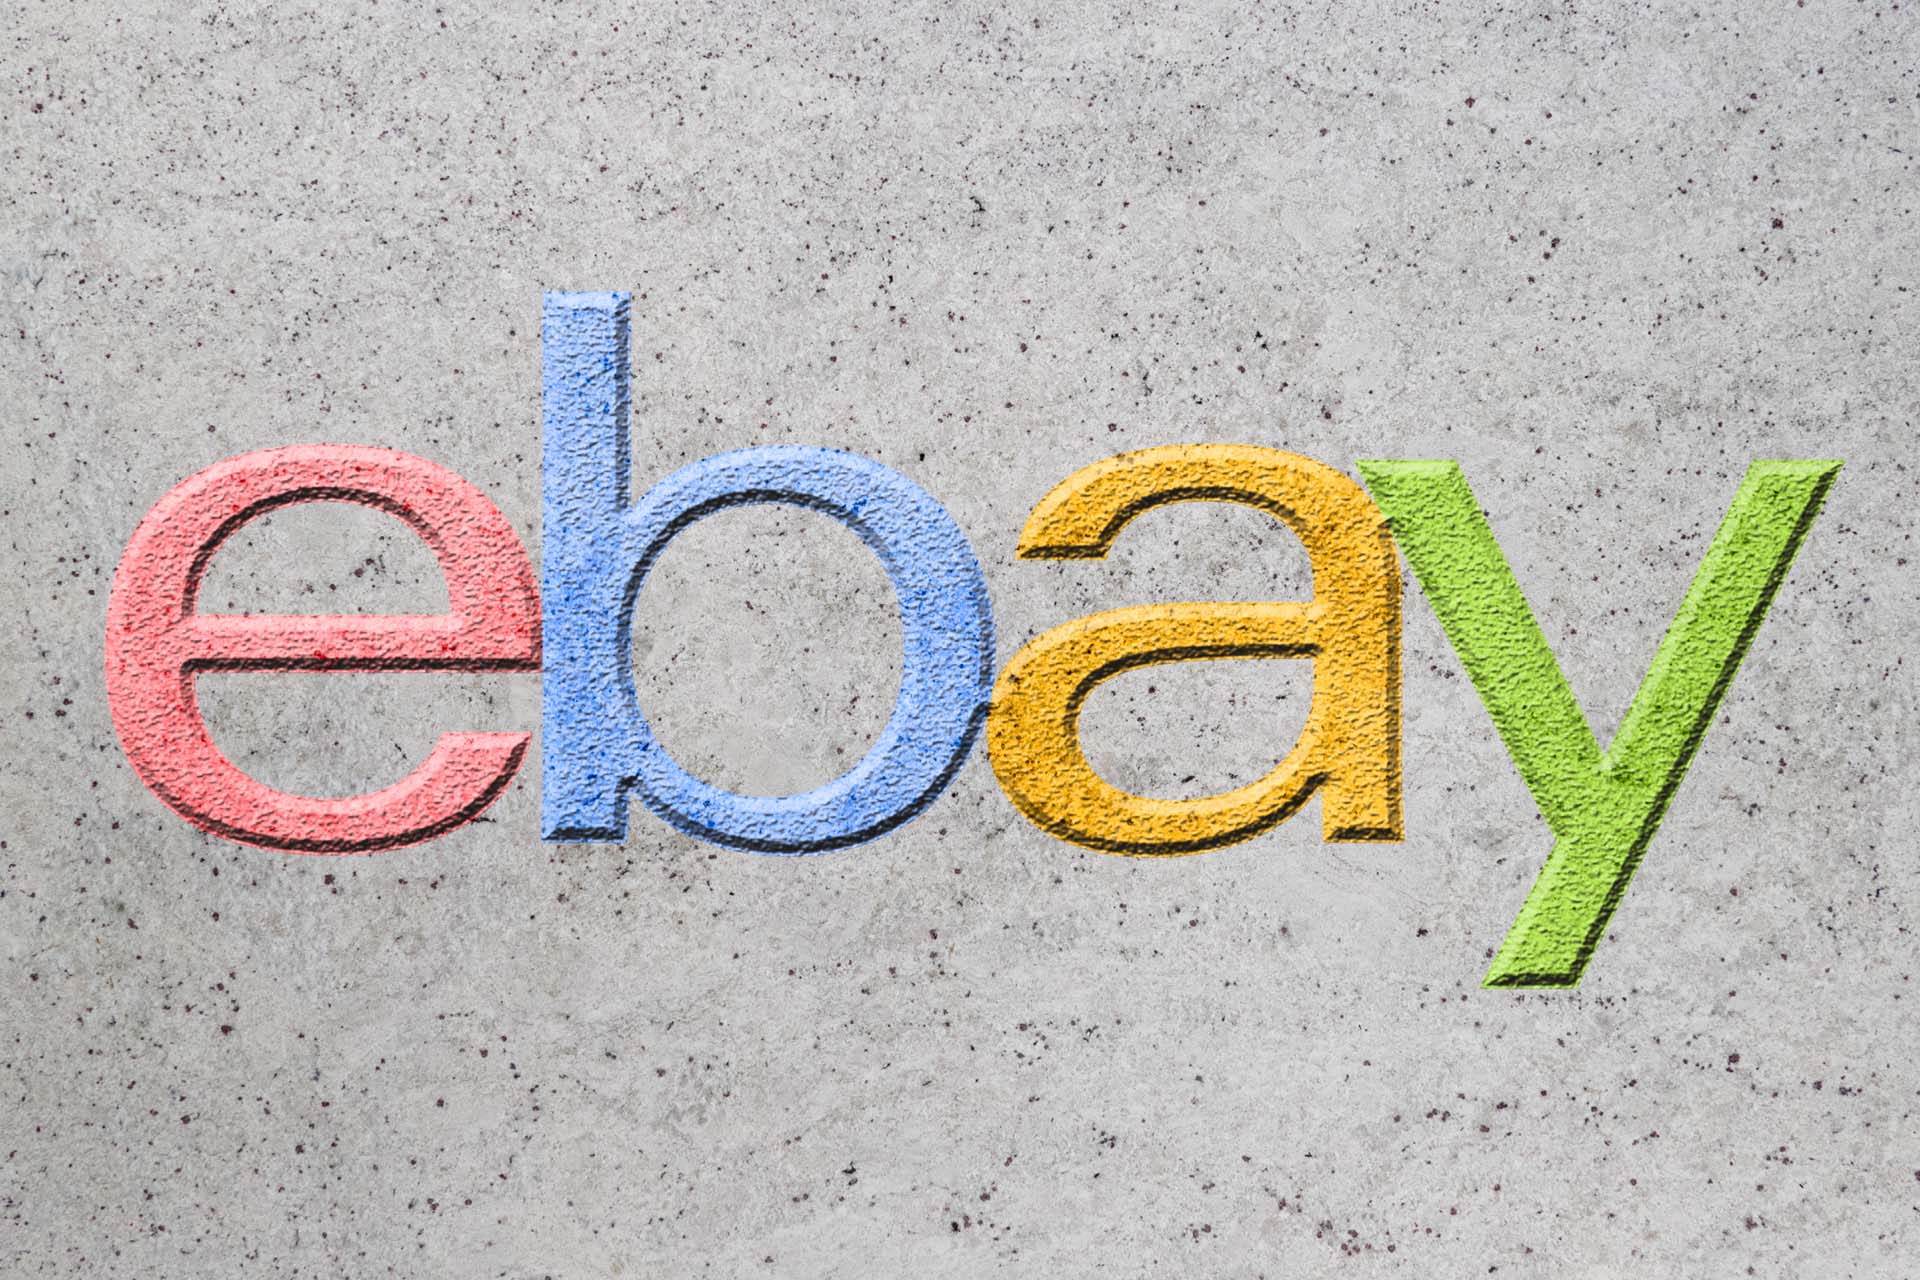 ebay granite worktops image